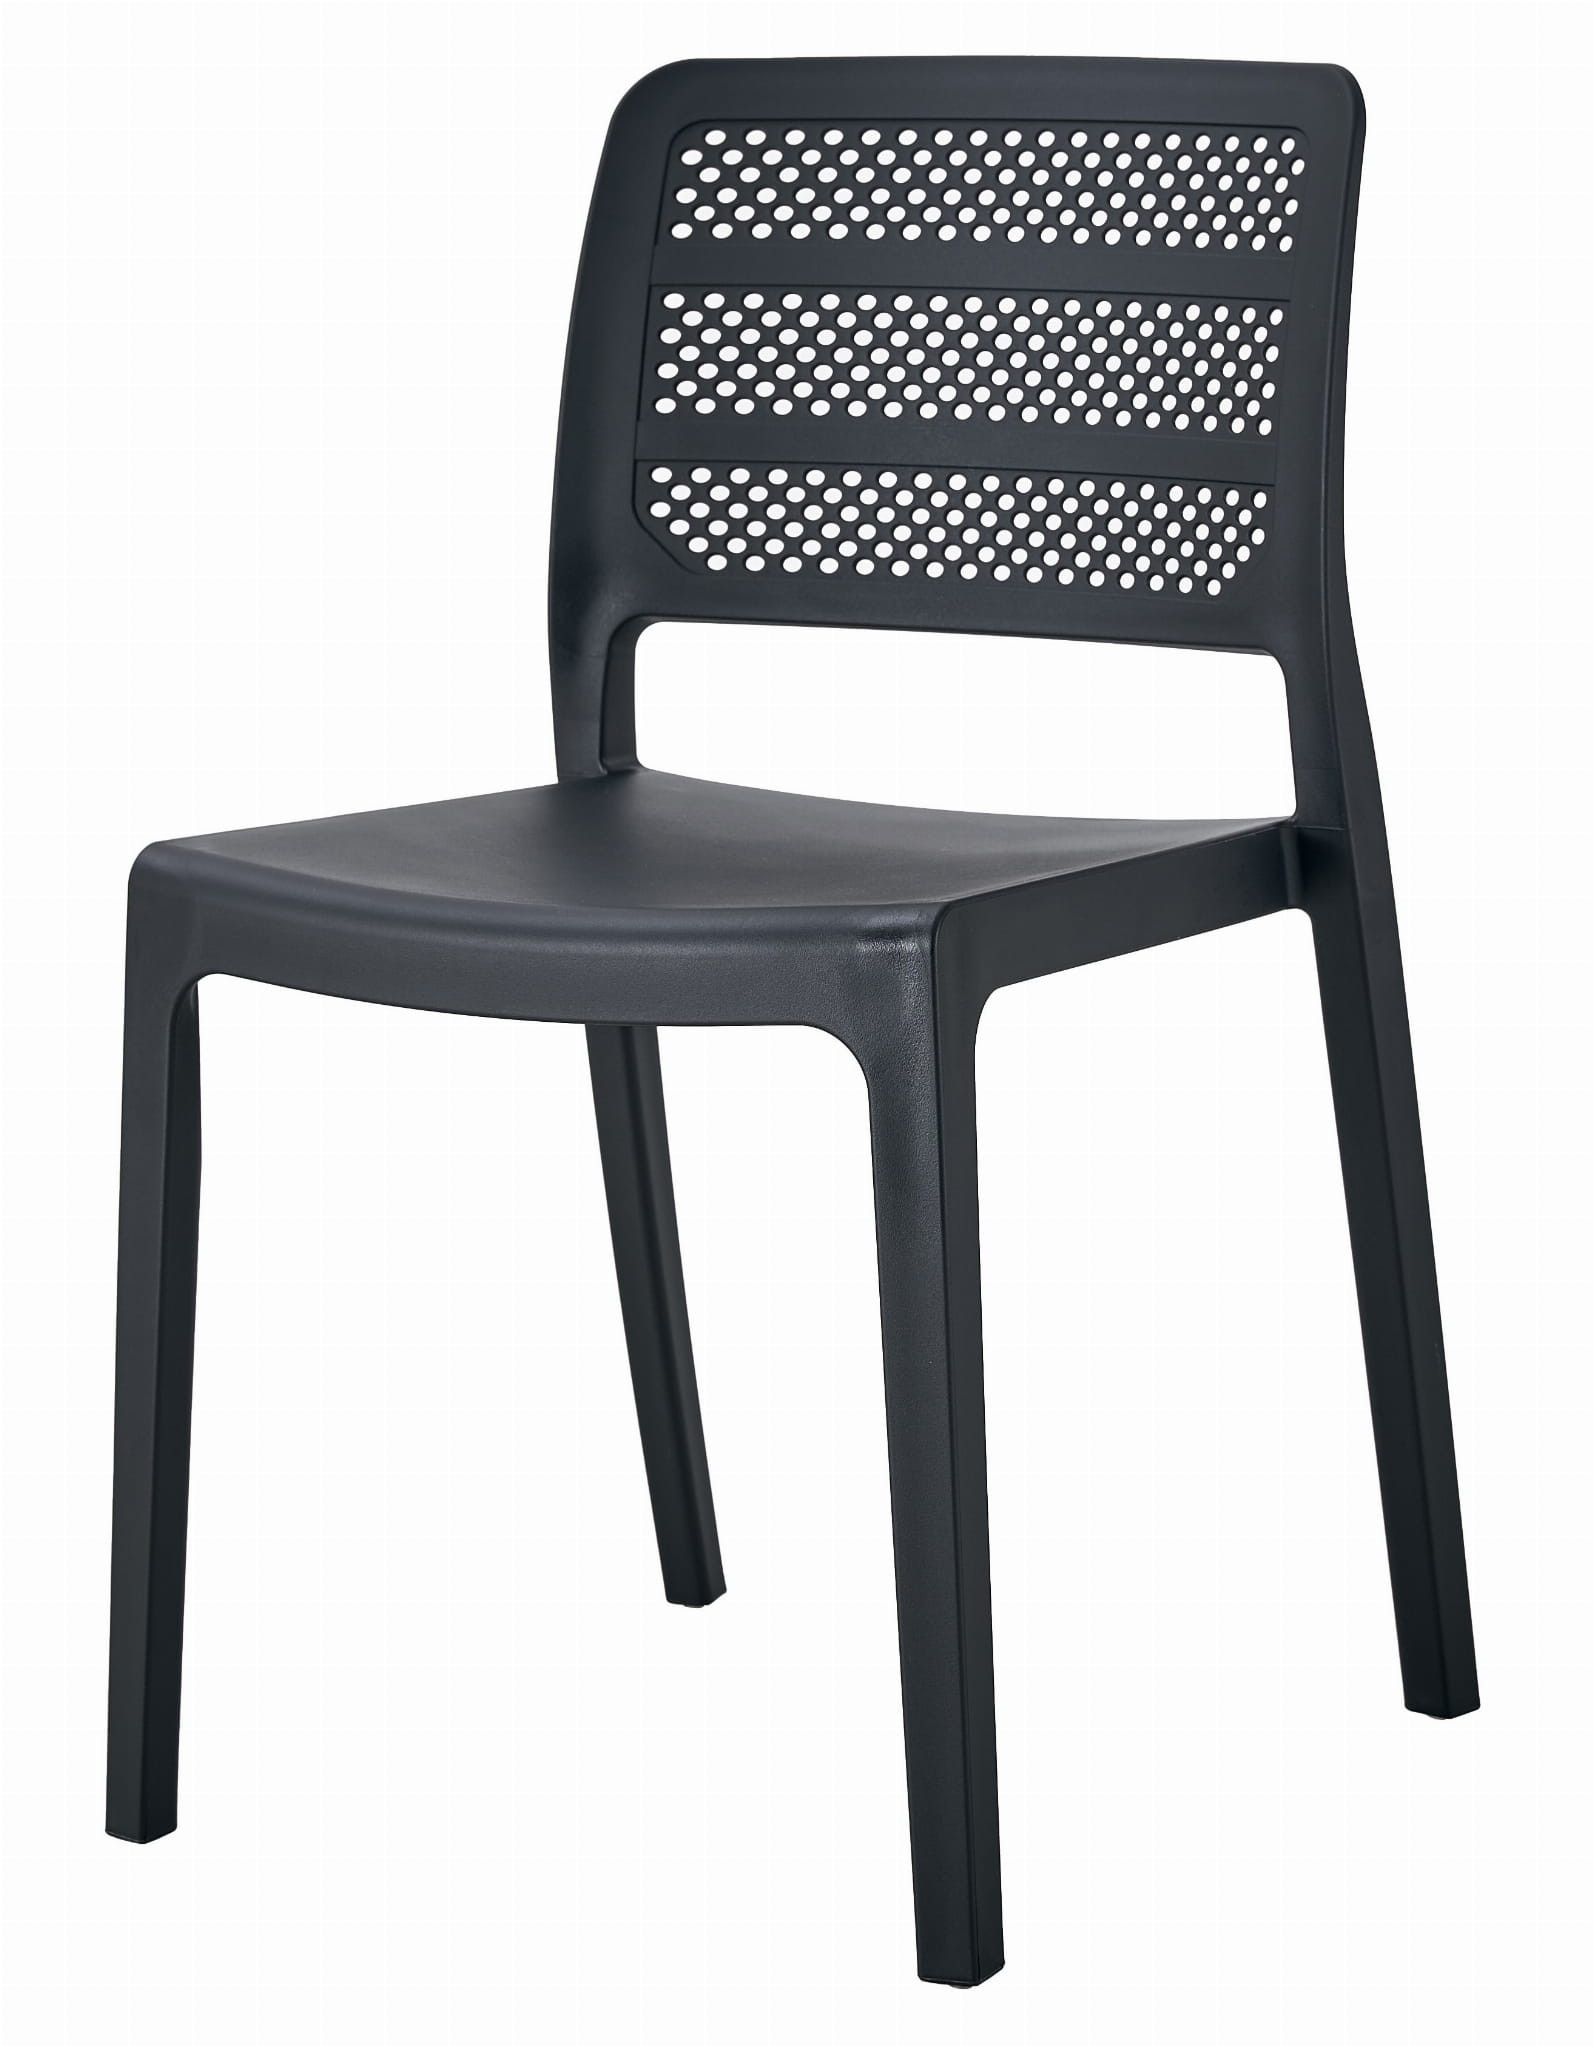 Židle PAGI černá